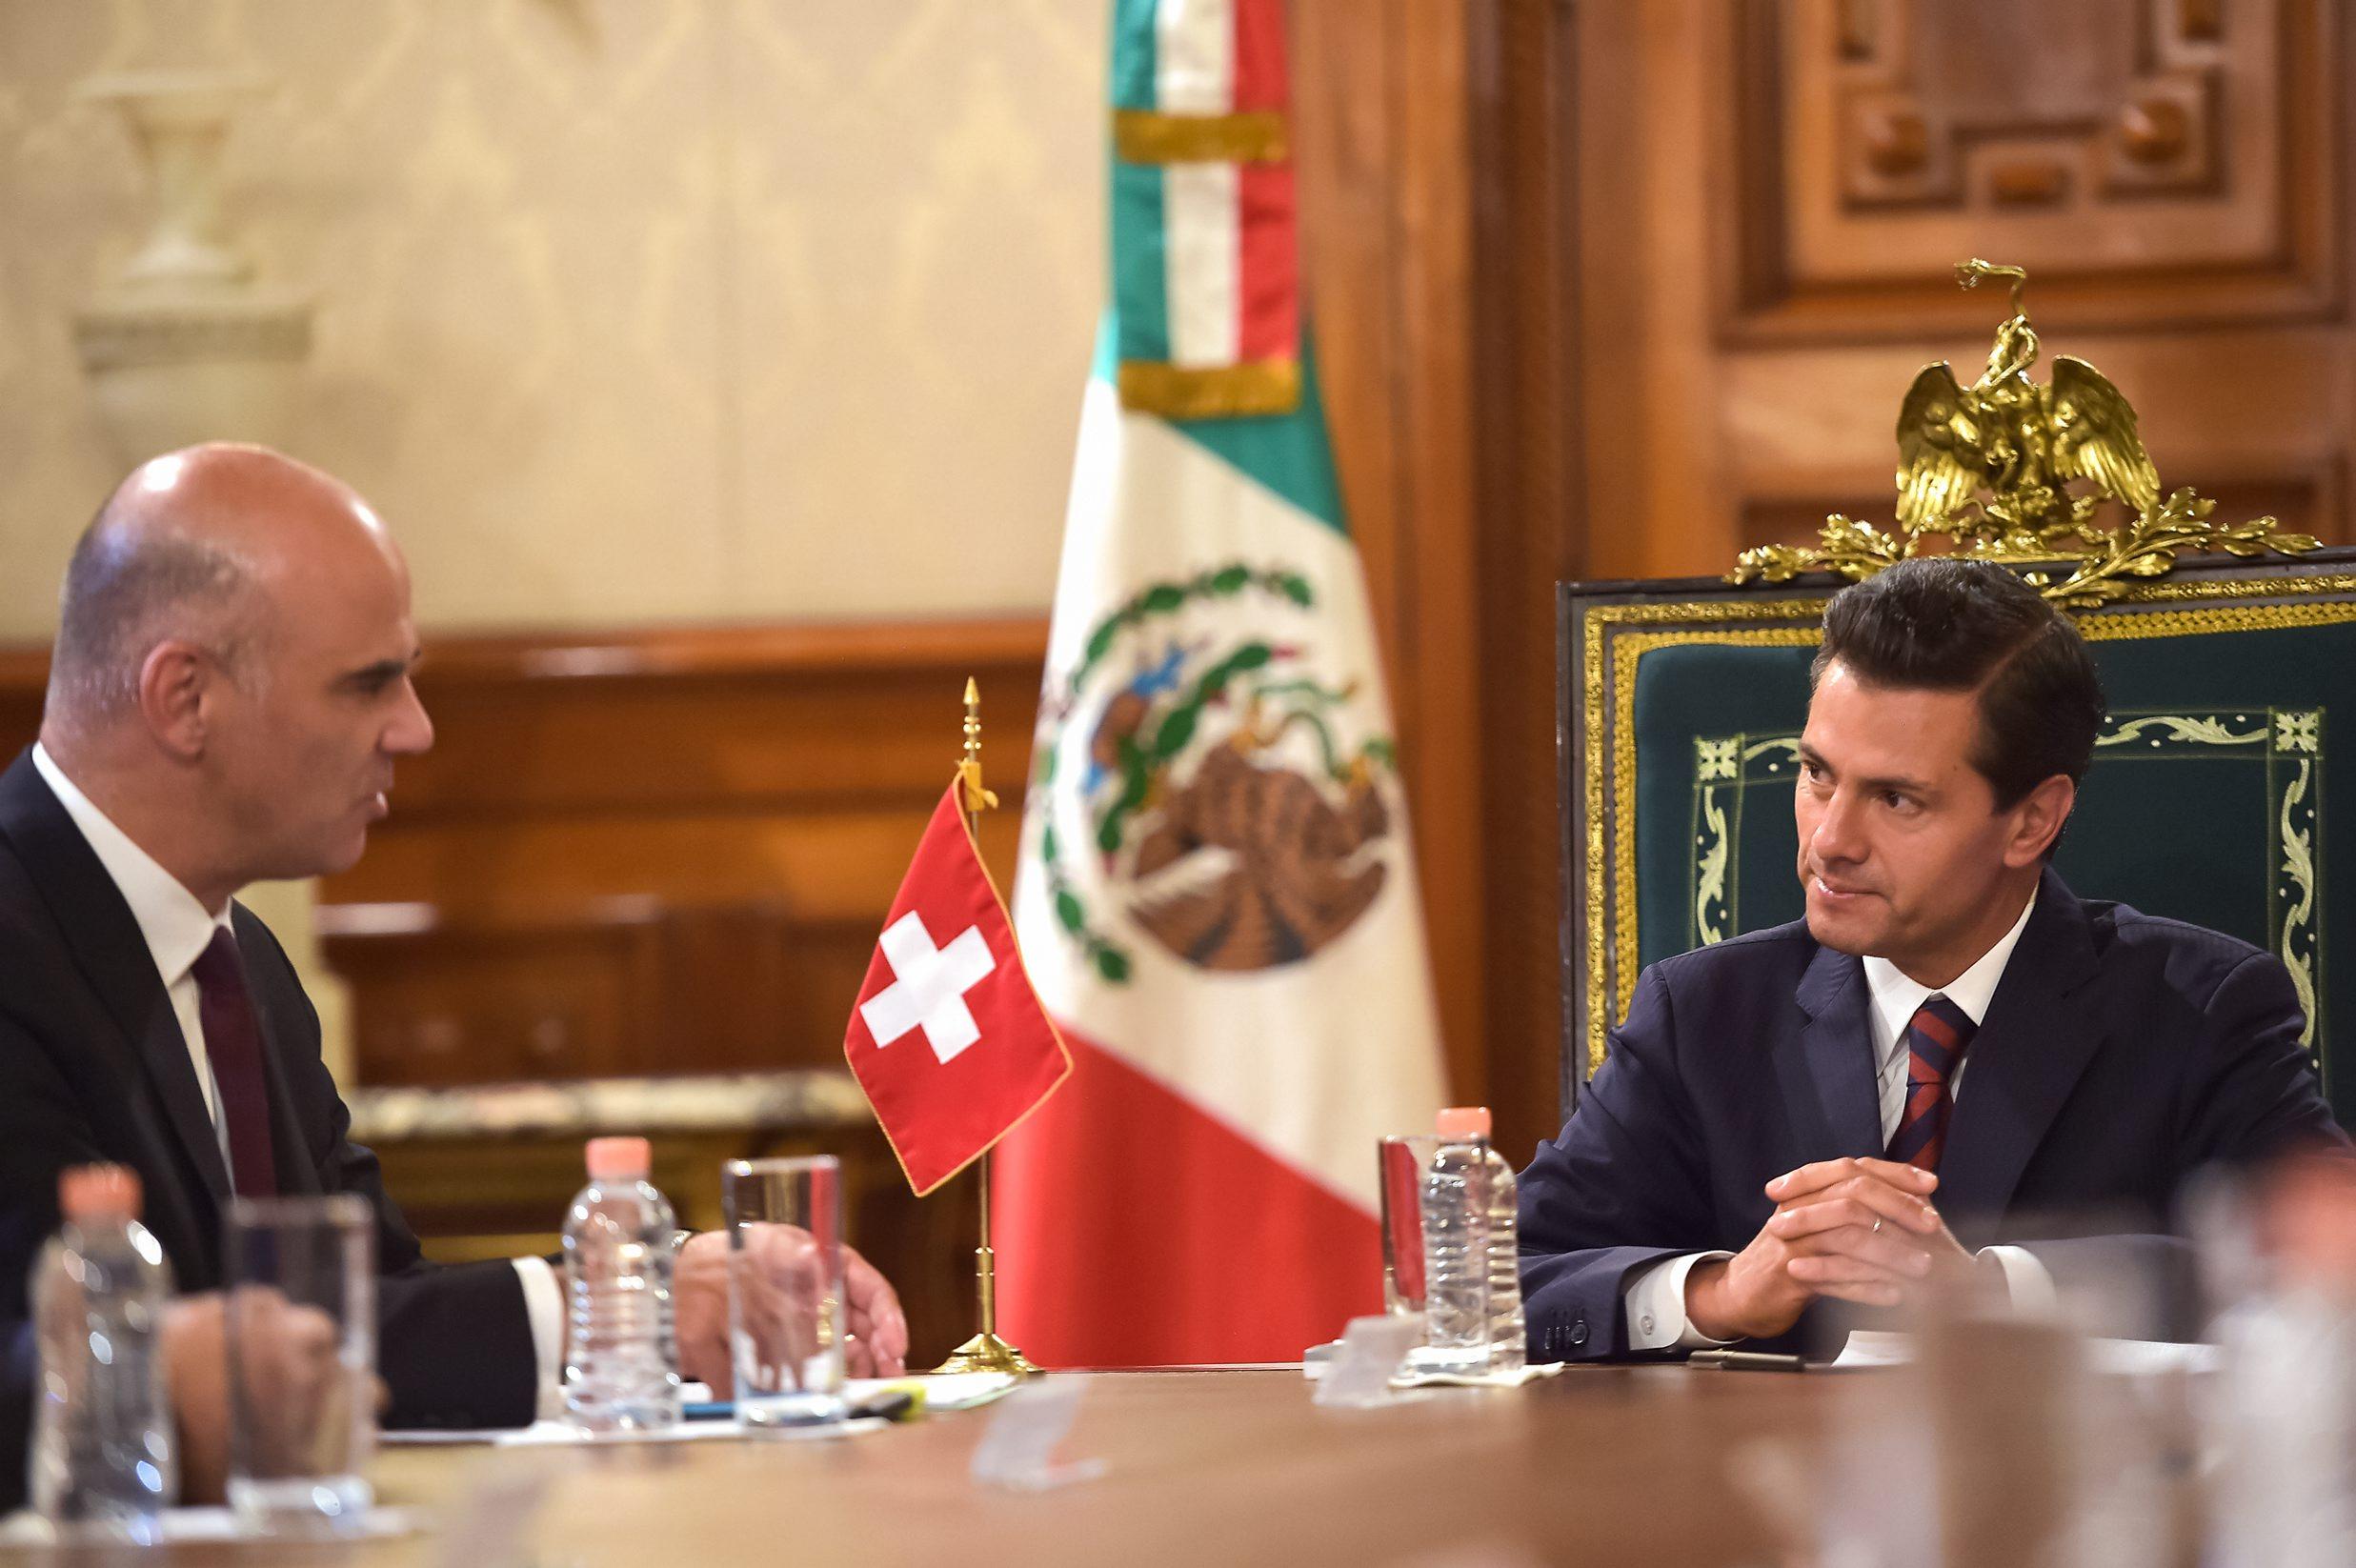 Reunión entre Alain Berset, vicepresidente de Suiza, y el presidente de México, Enrique Peña Nieto